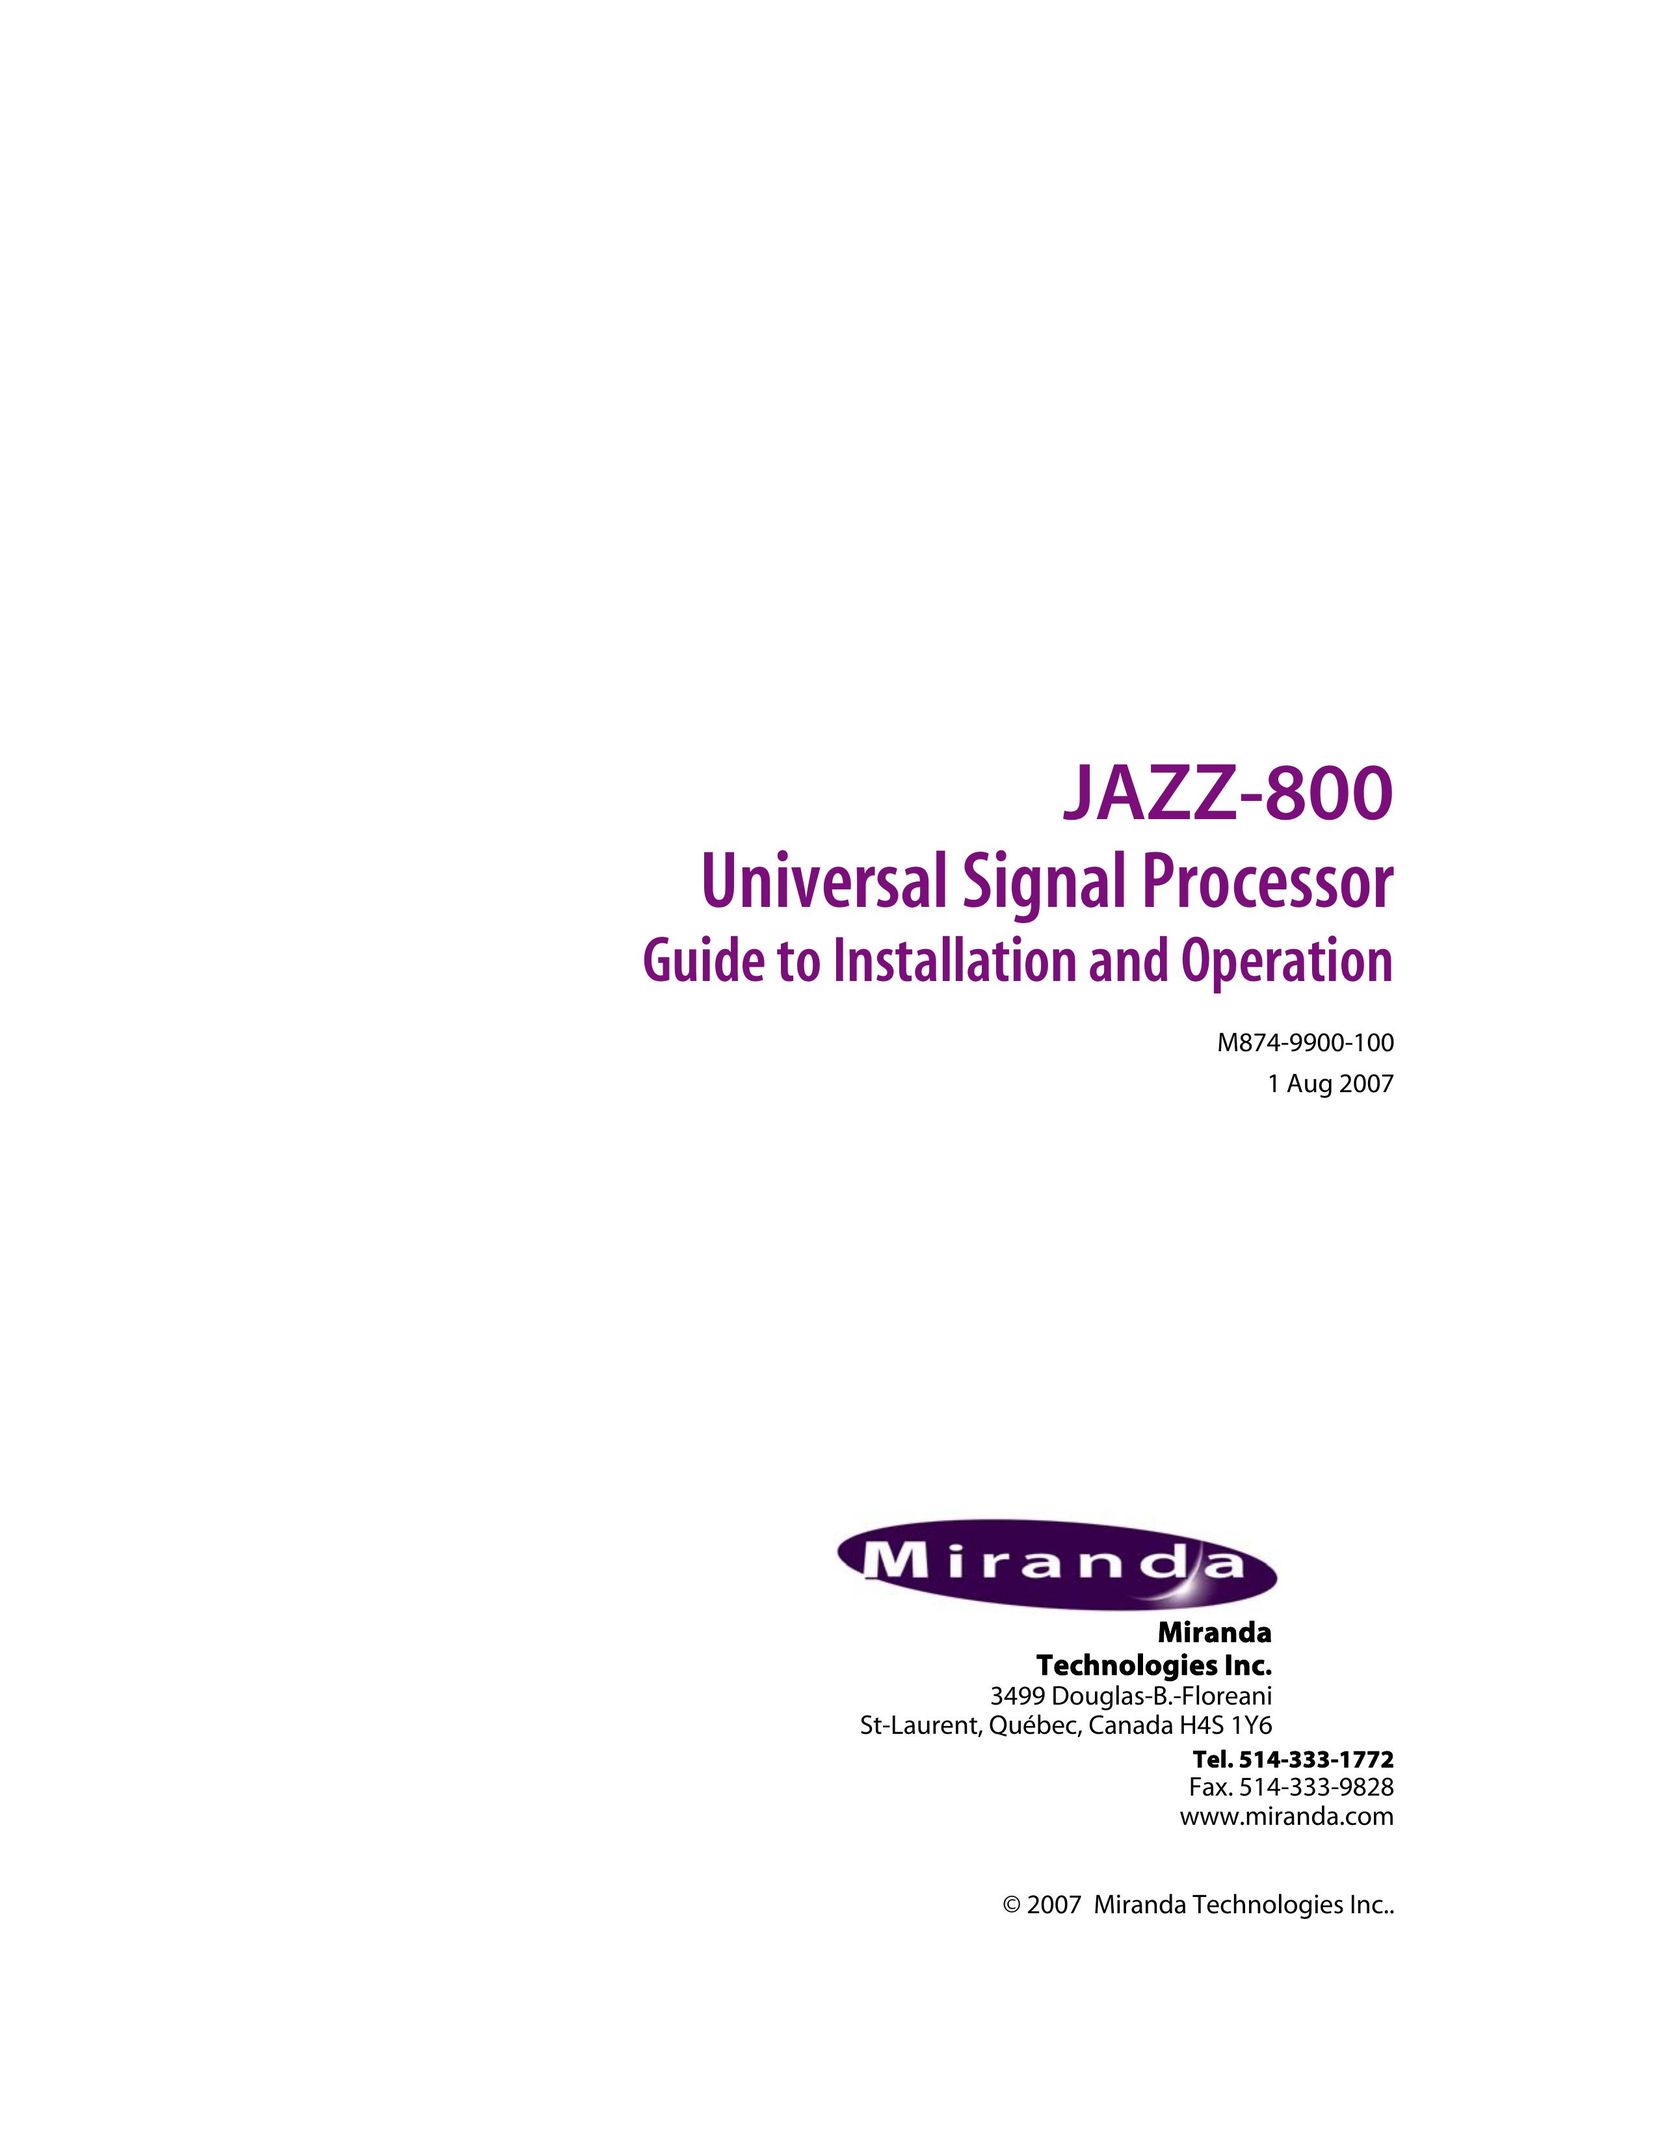 Miranda Camera Co JAZZ-800 Stereo System User Manual